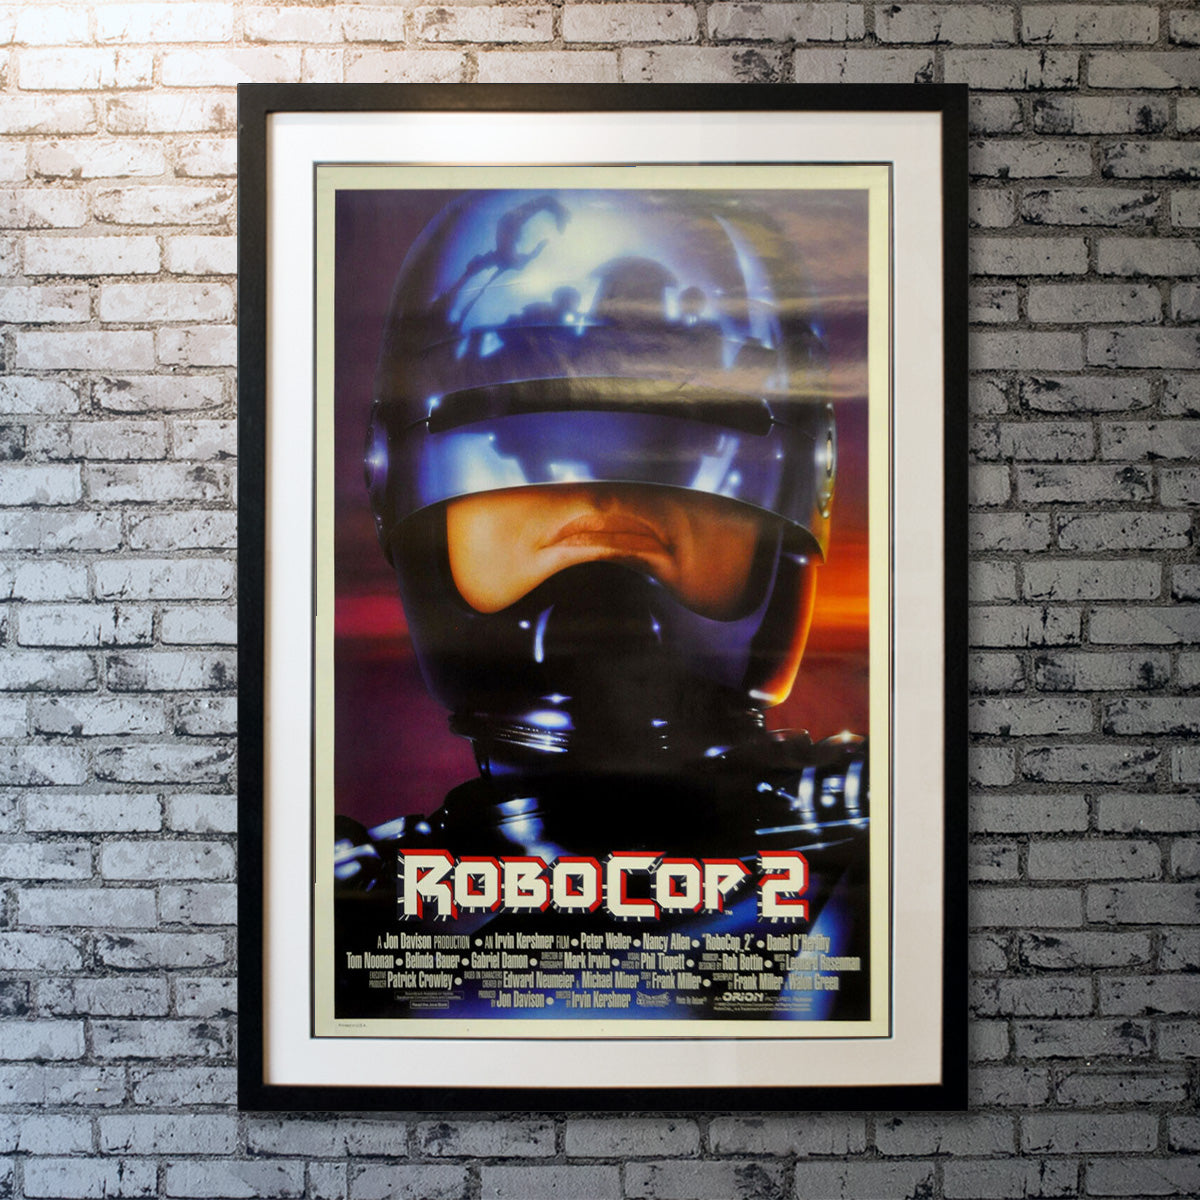 Original Movie Poster of Robocop 2 (1990)